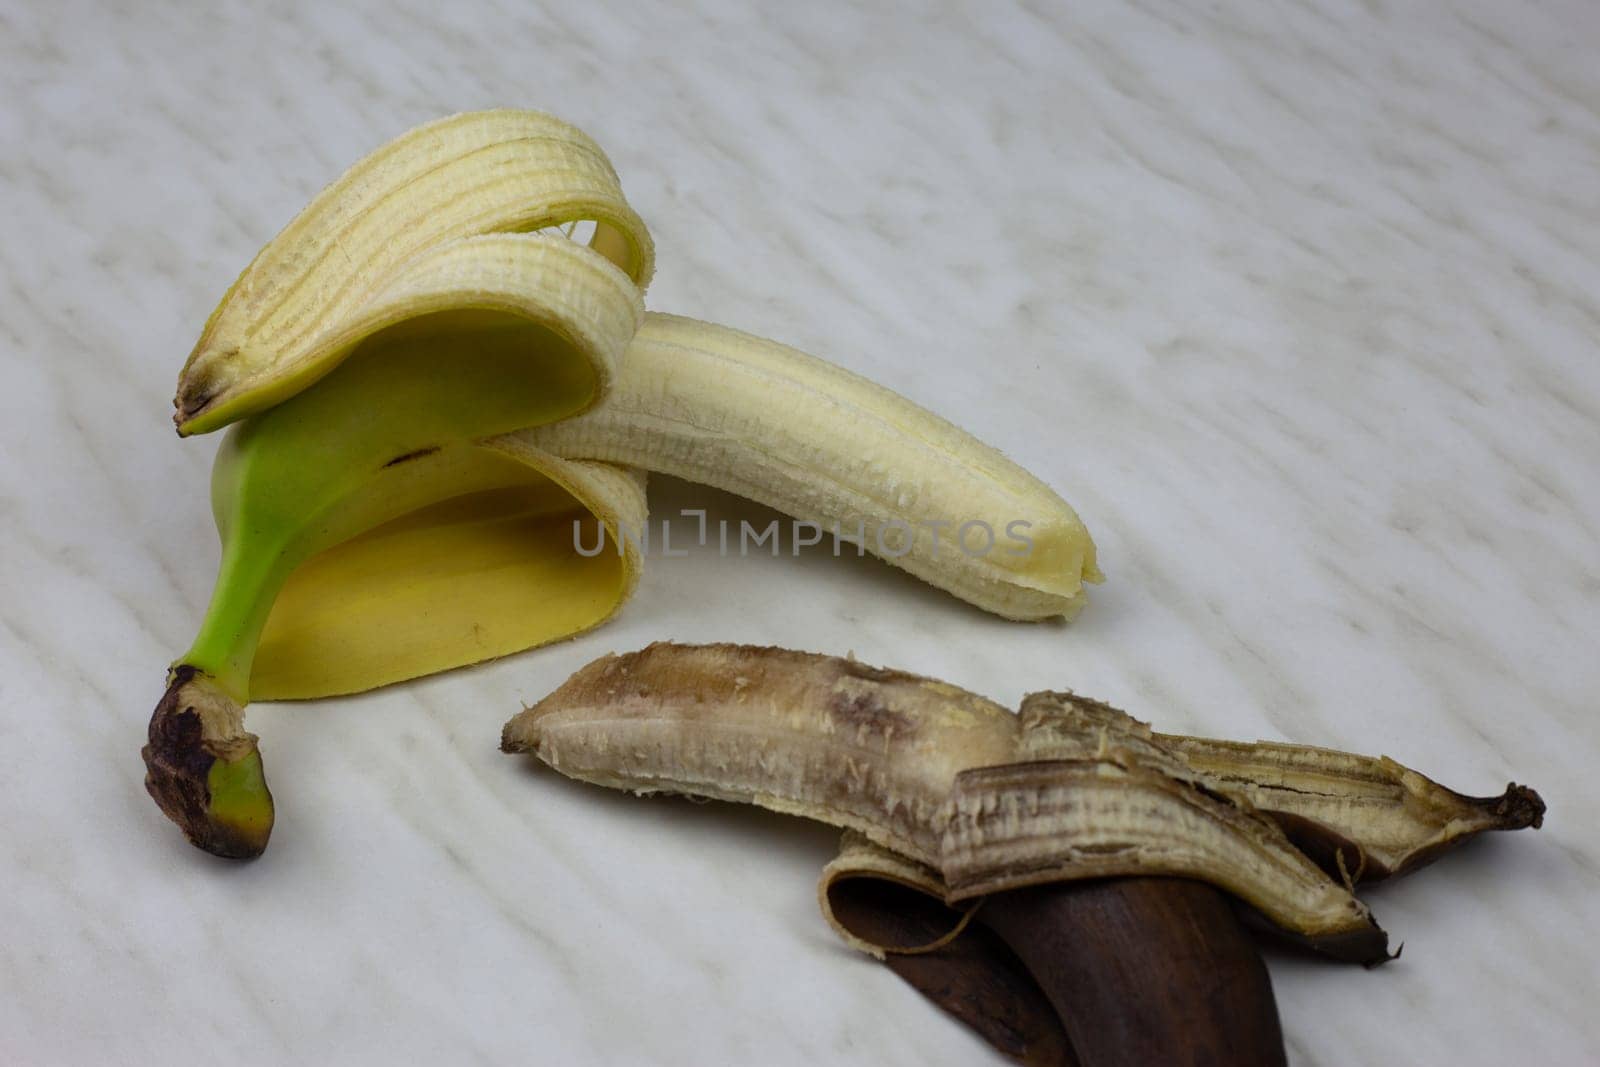 Juicy fresh banana fruit in open yellow peel next to rotten expired banana by timurmalazoniia